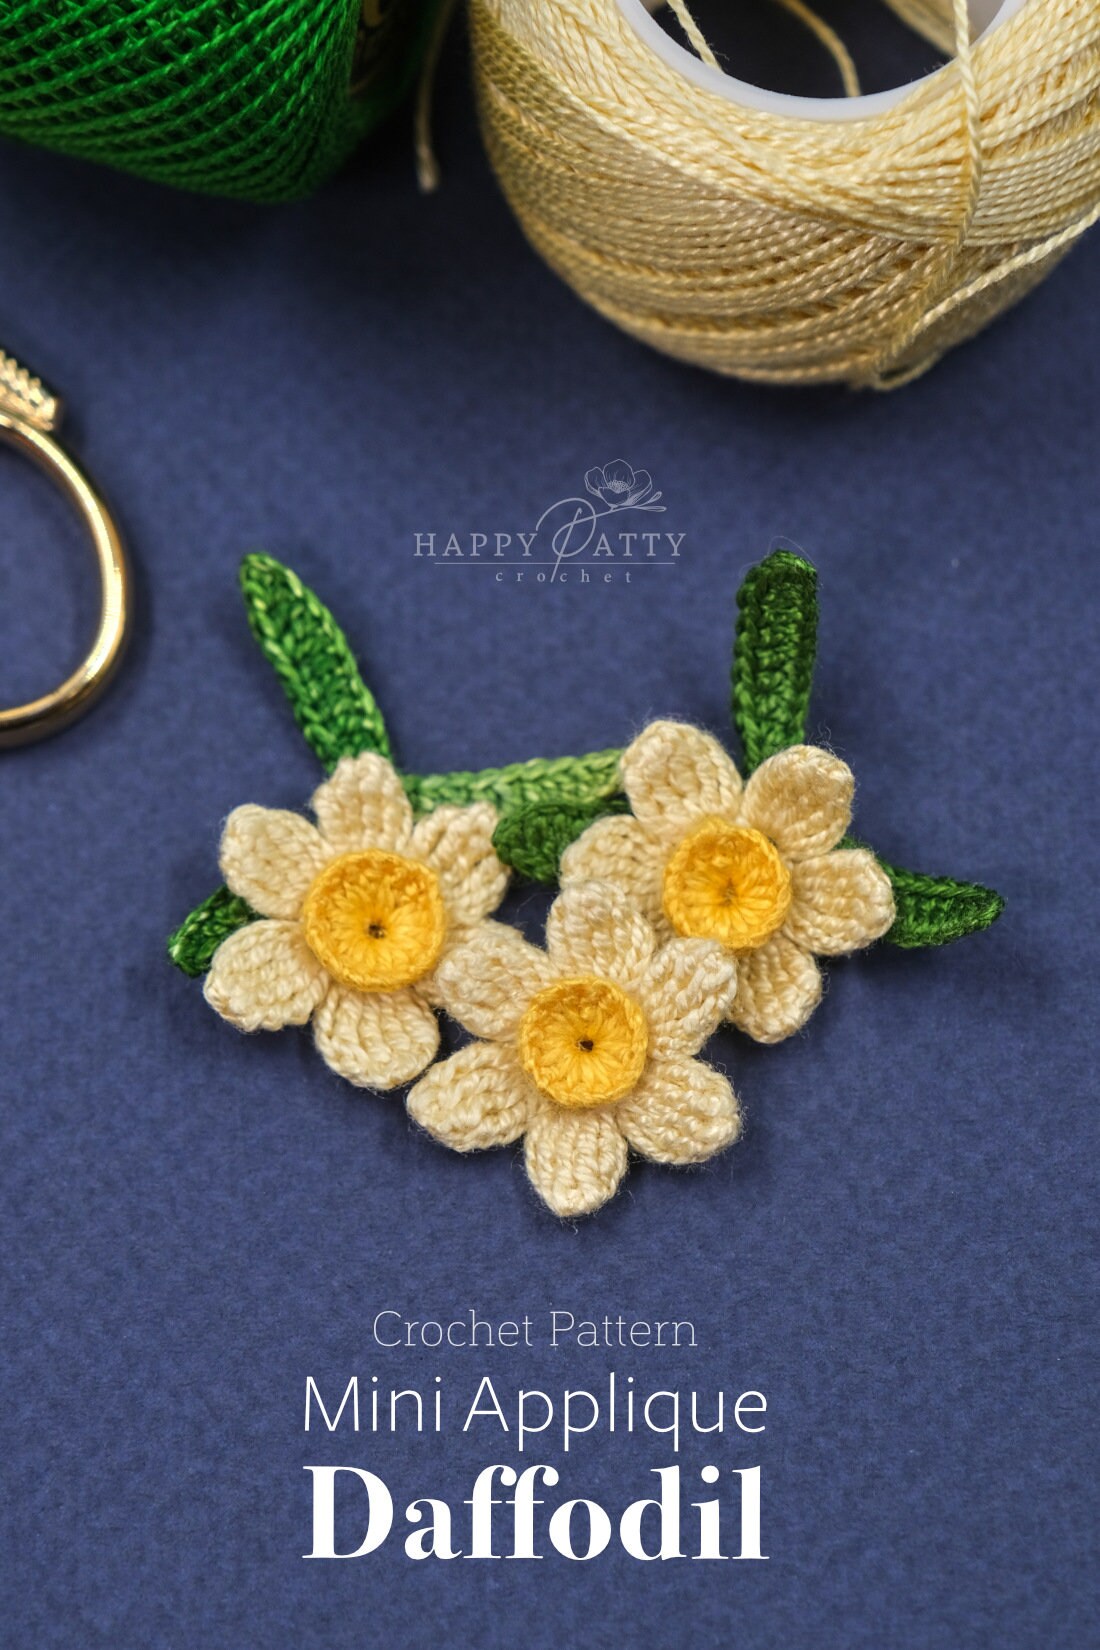 Crochet Mini Daffodil Applique Pattern - Crochet Flower Pattern for a Miniature Daffodil / Narcissus Applique